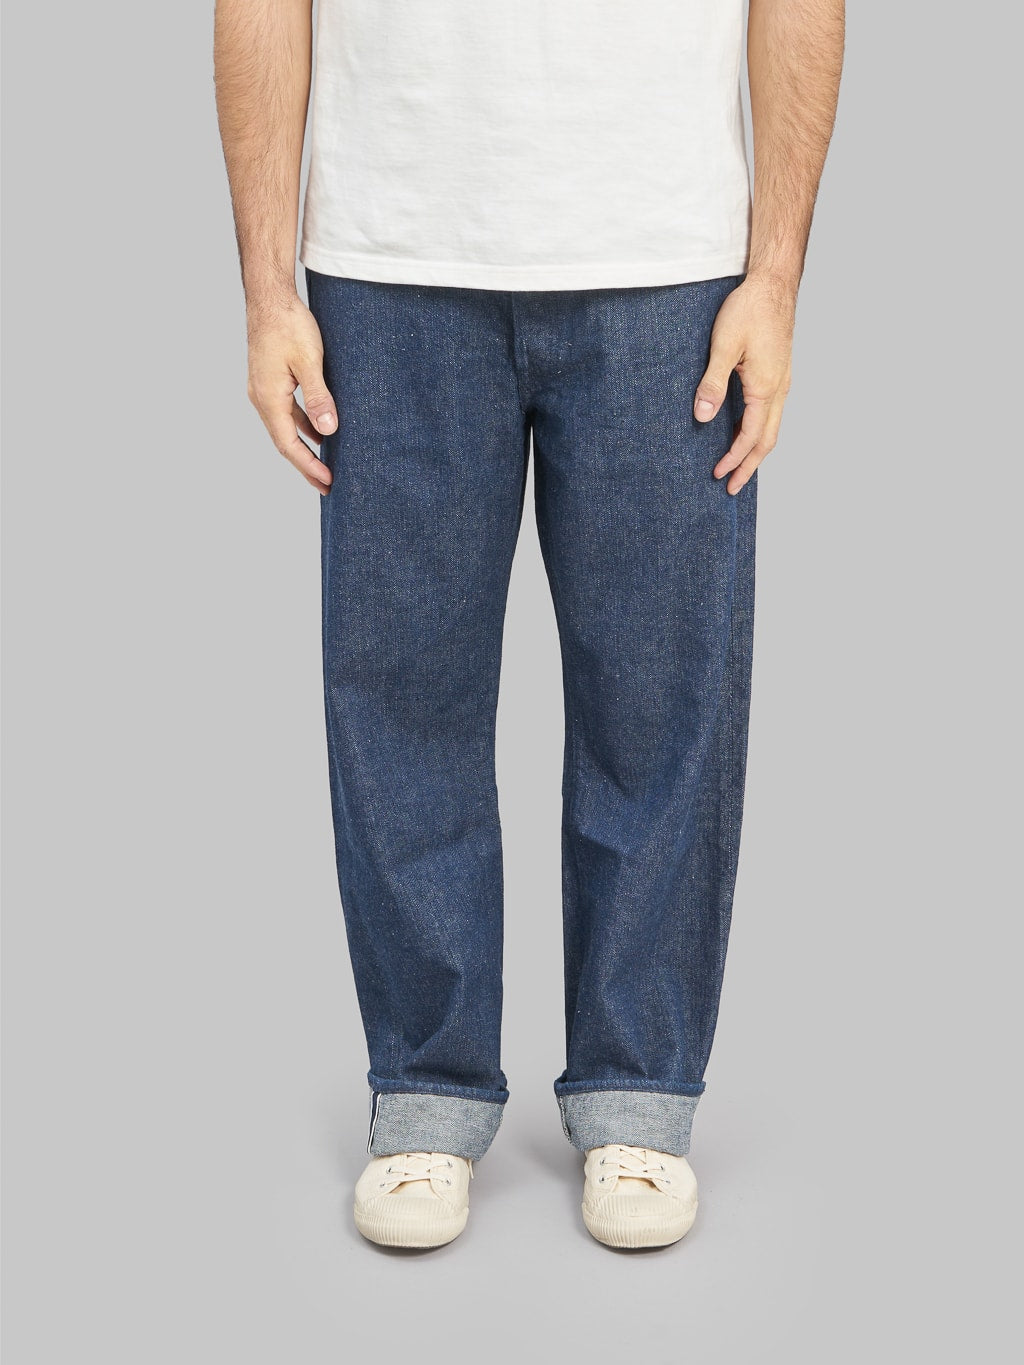 fullcount 1121 duke original selvedge denim super wide jeans front fit